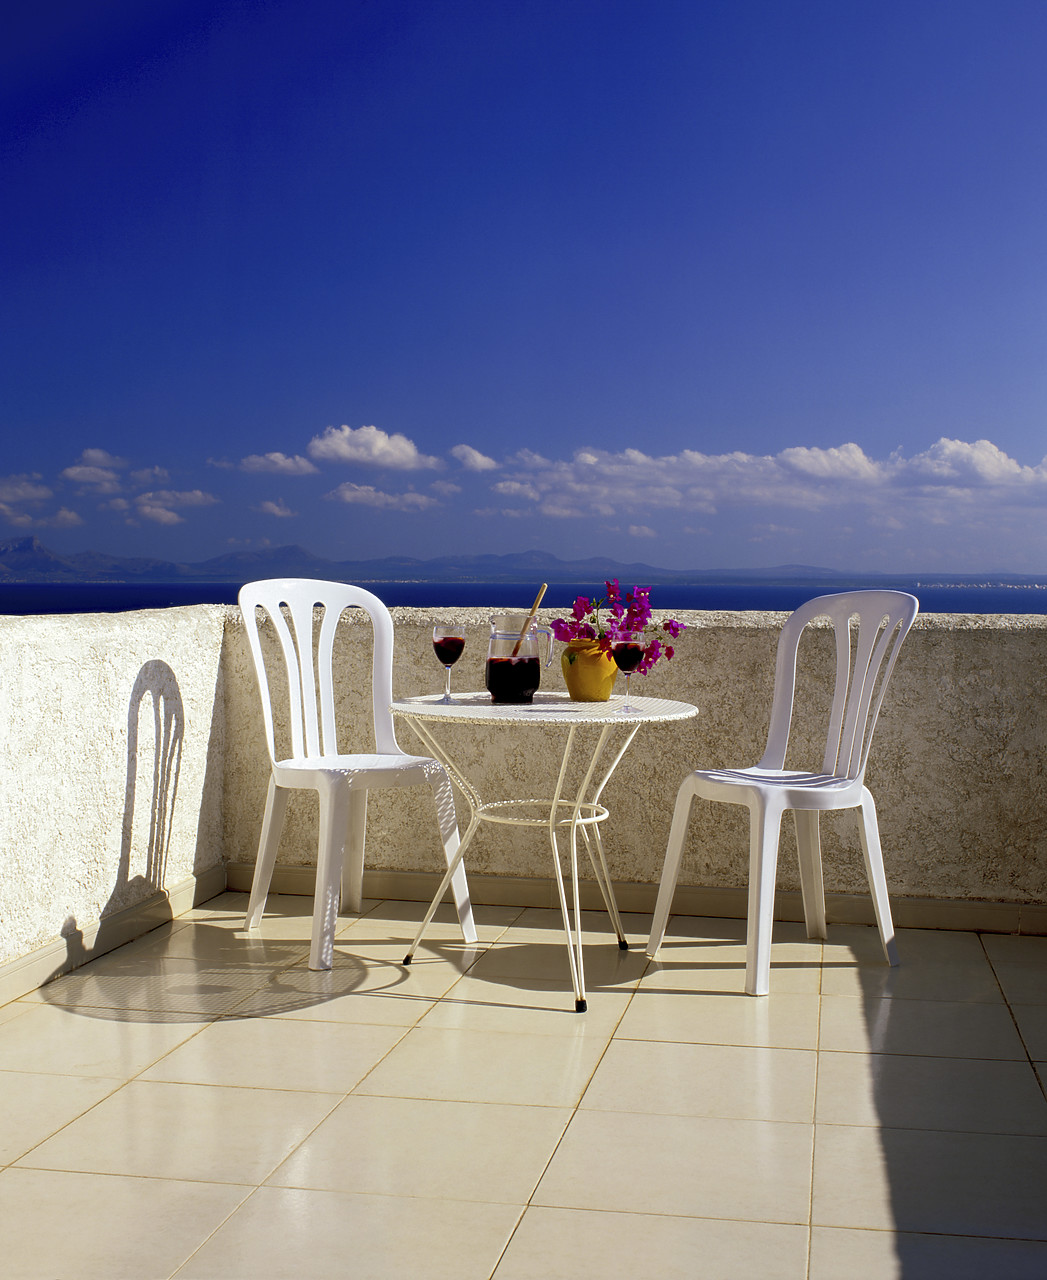 #050255-2 - Jug of Sangria, Table & Chairs on Balcony, Mallorca, Spain